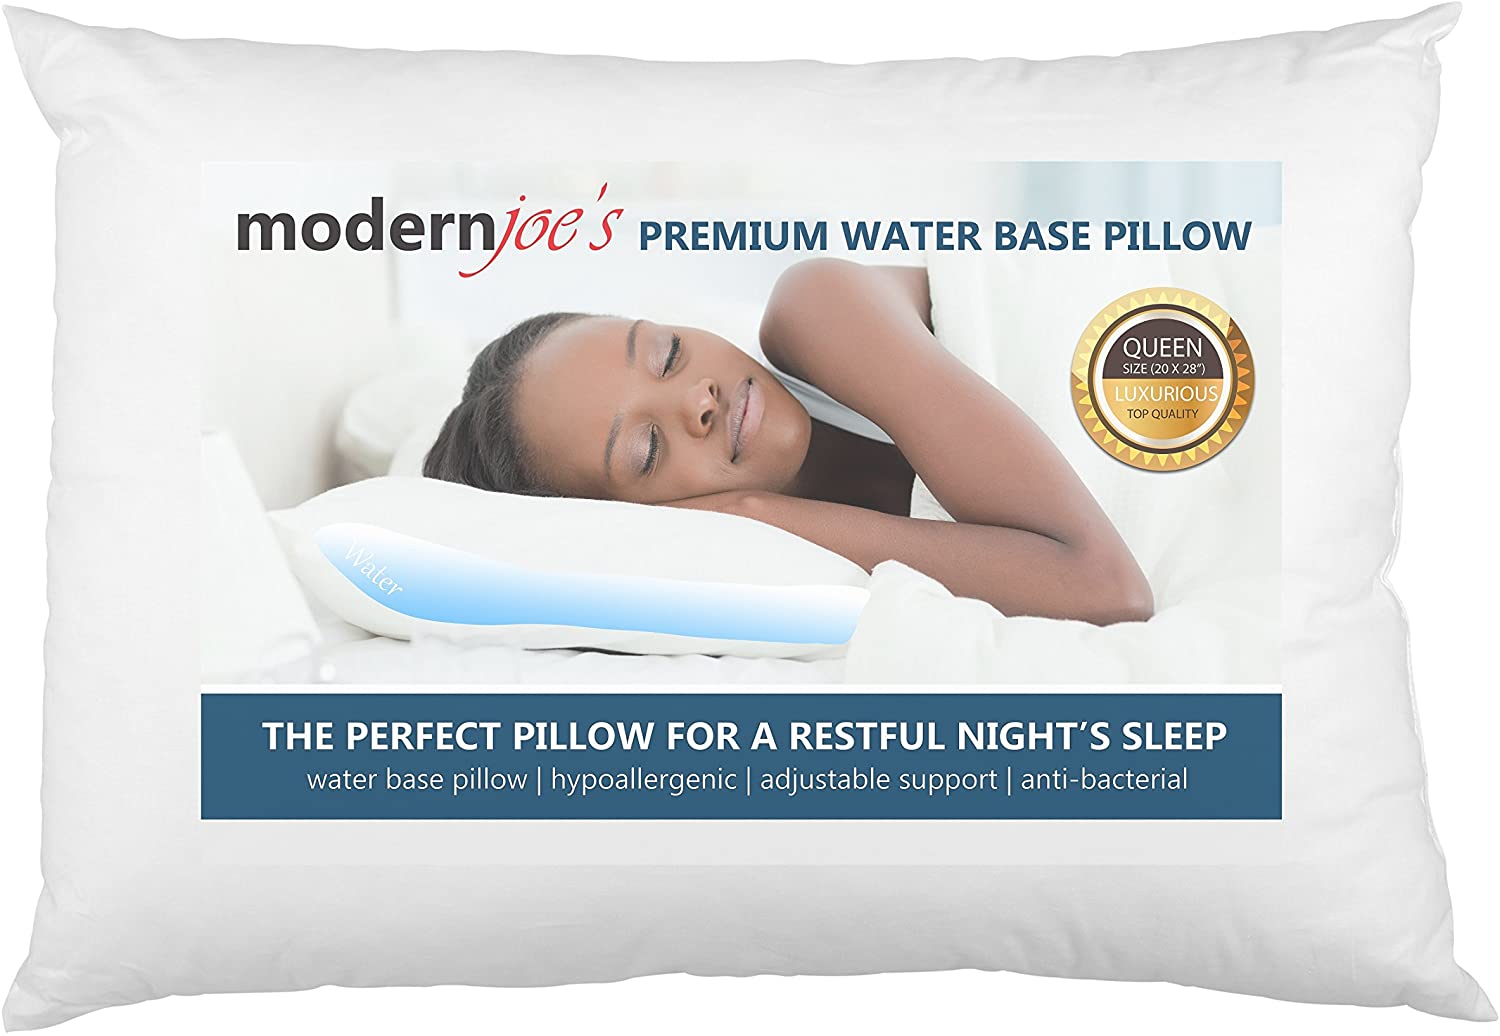 MODERNJOE'S Premium Water Base Pillow